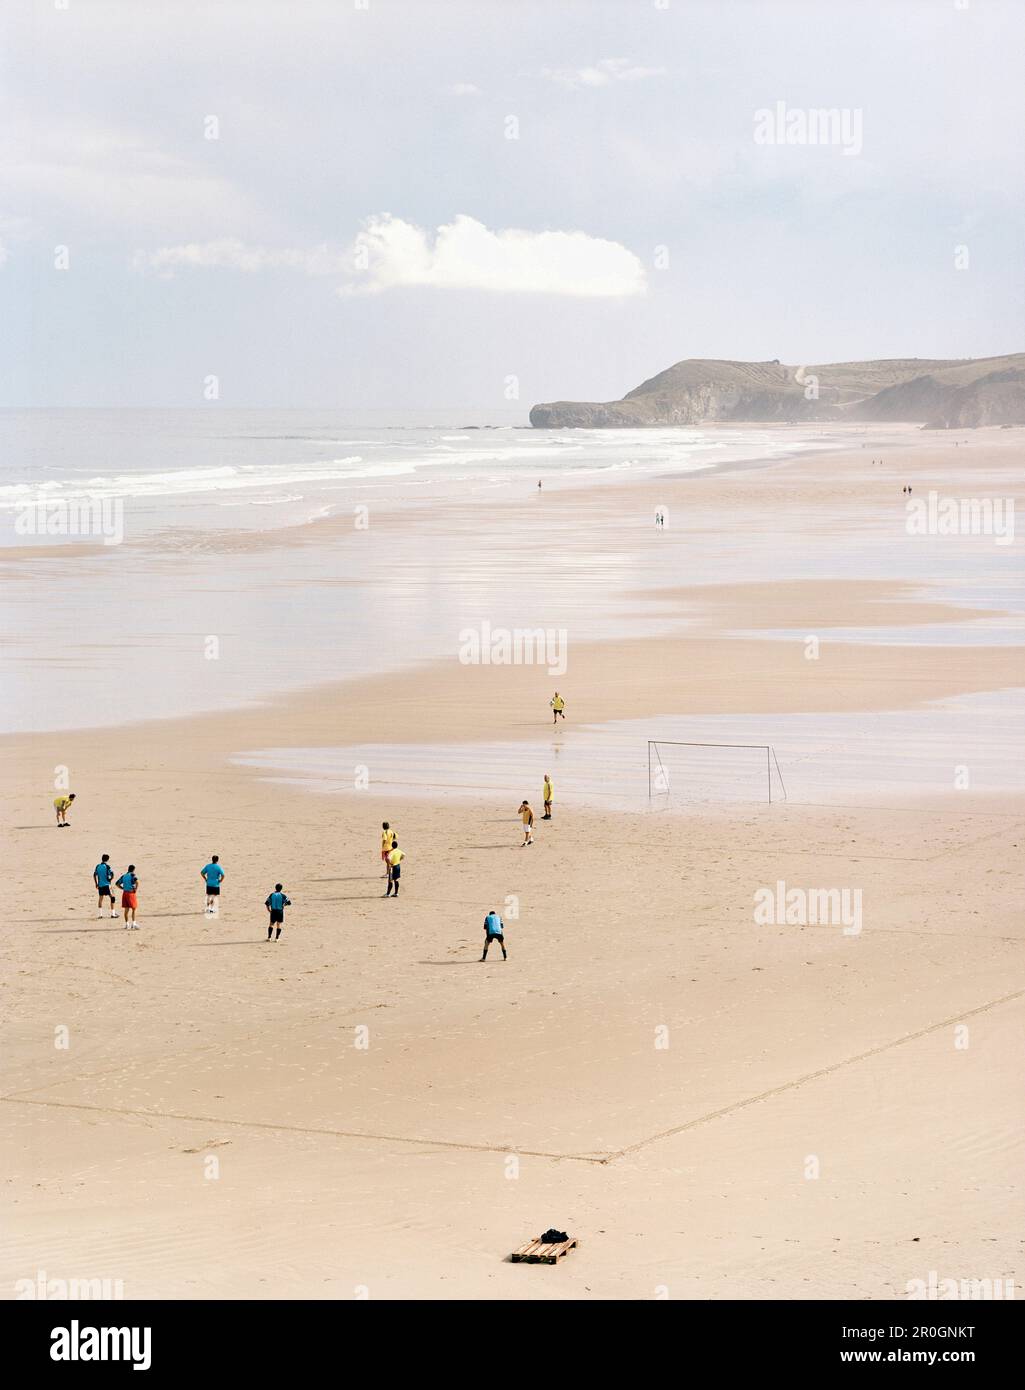 People playing soccer at beach, Playa de Meron, San Vicente de la Barquera, Parque Natural de Oyambre, Cantabria, Spain Stock Photo